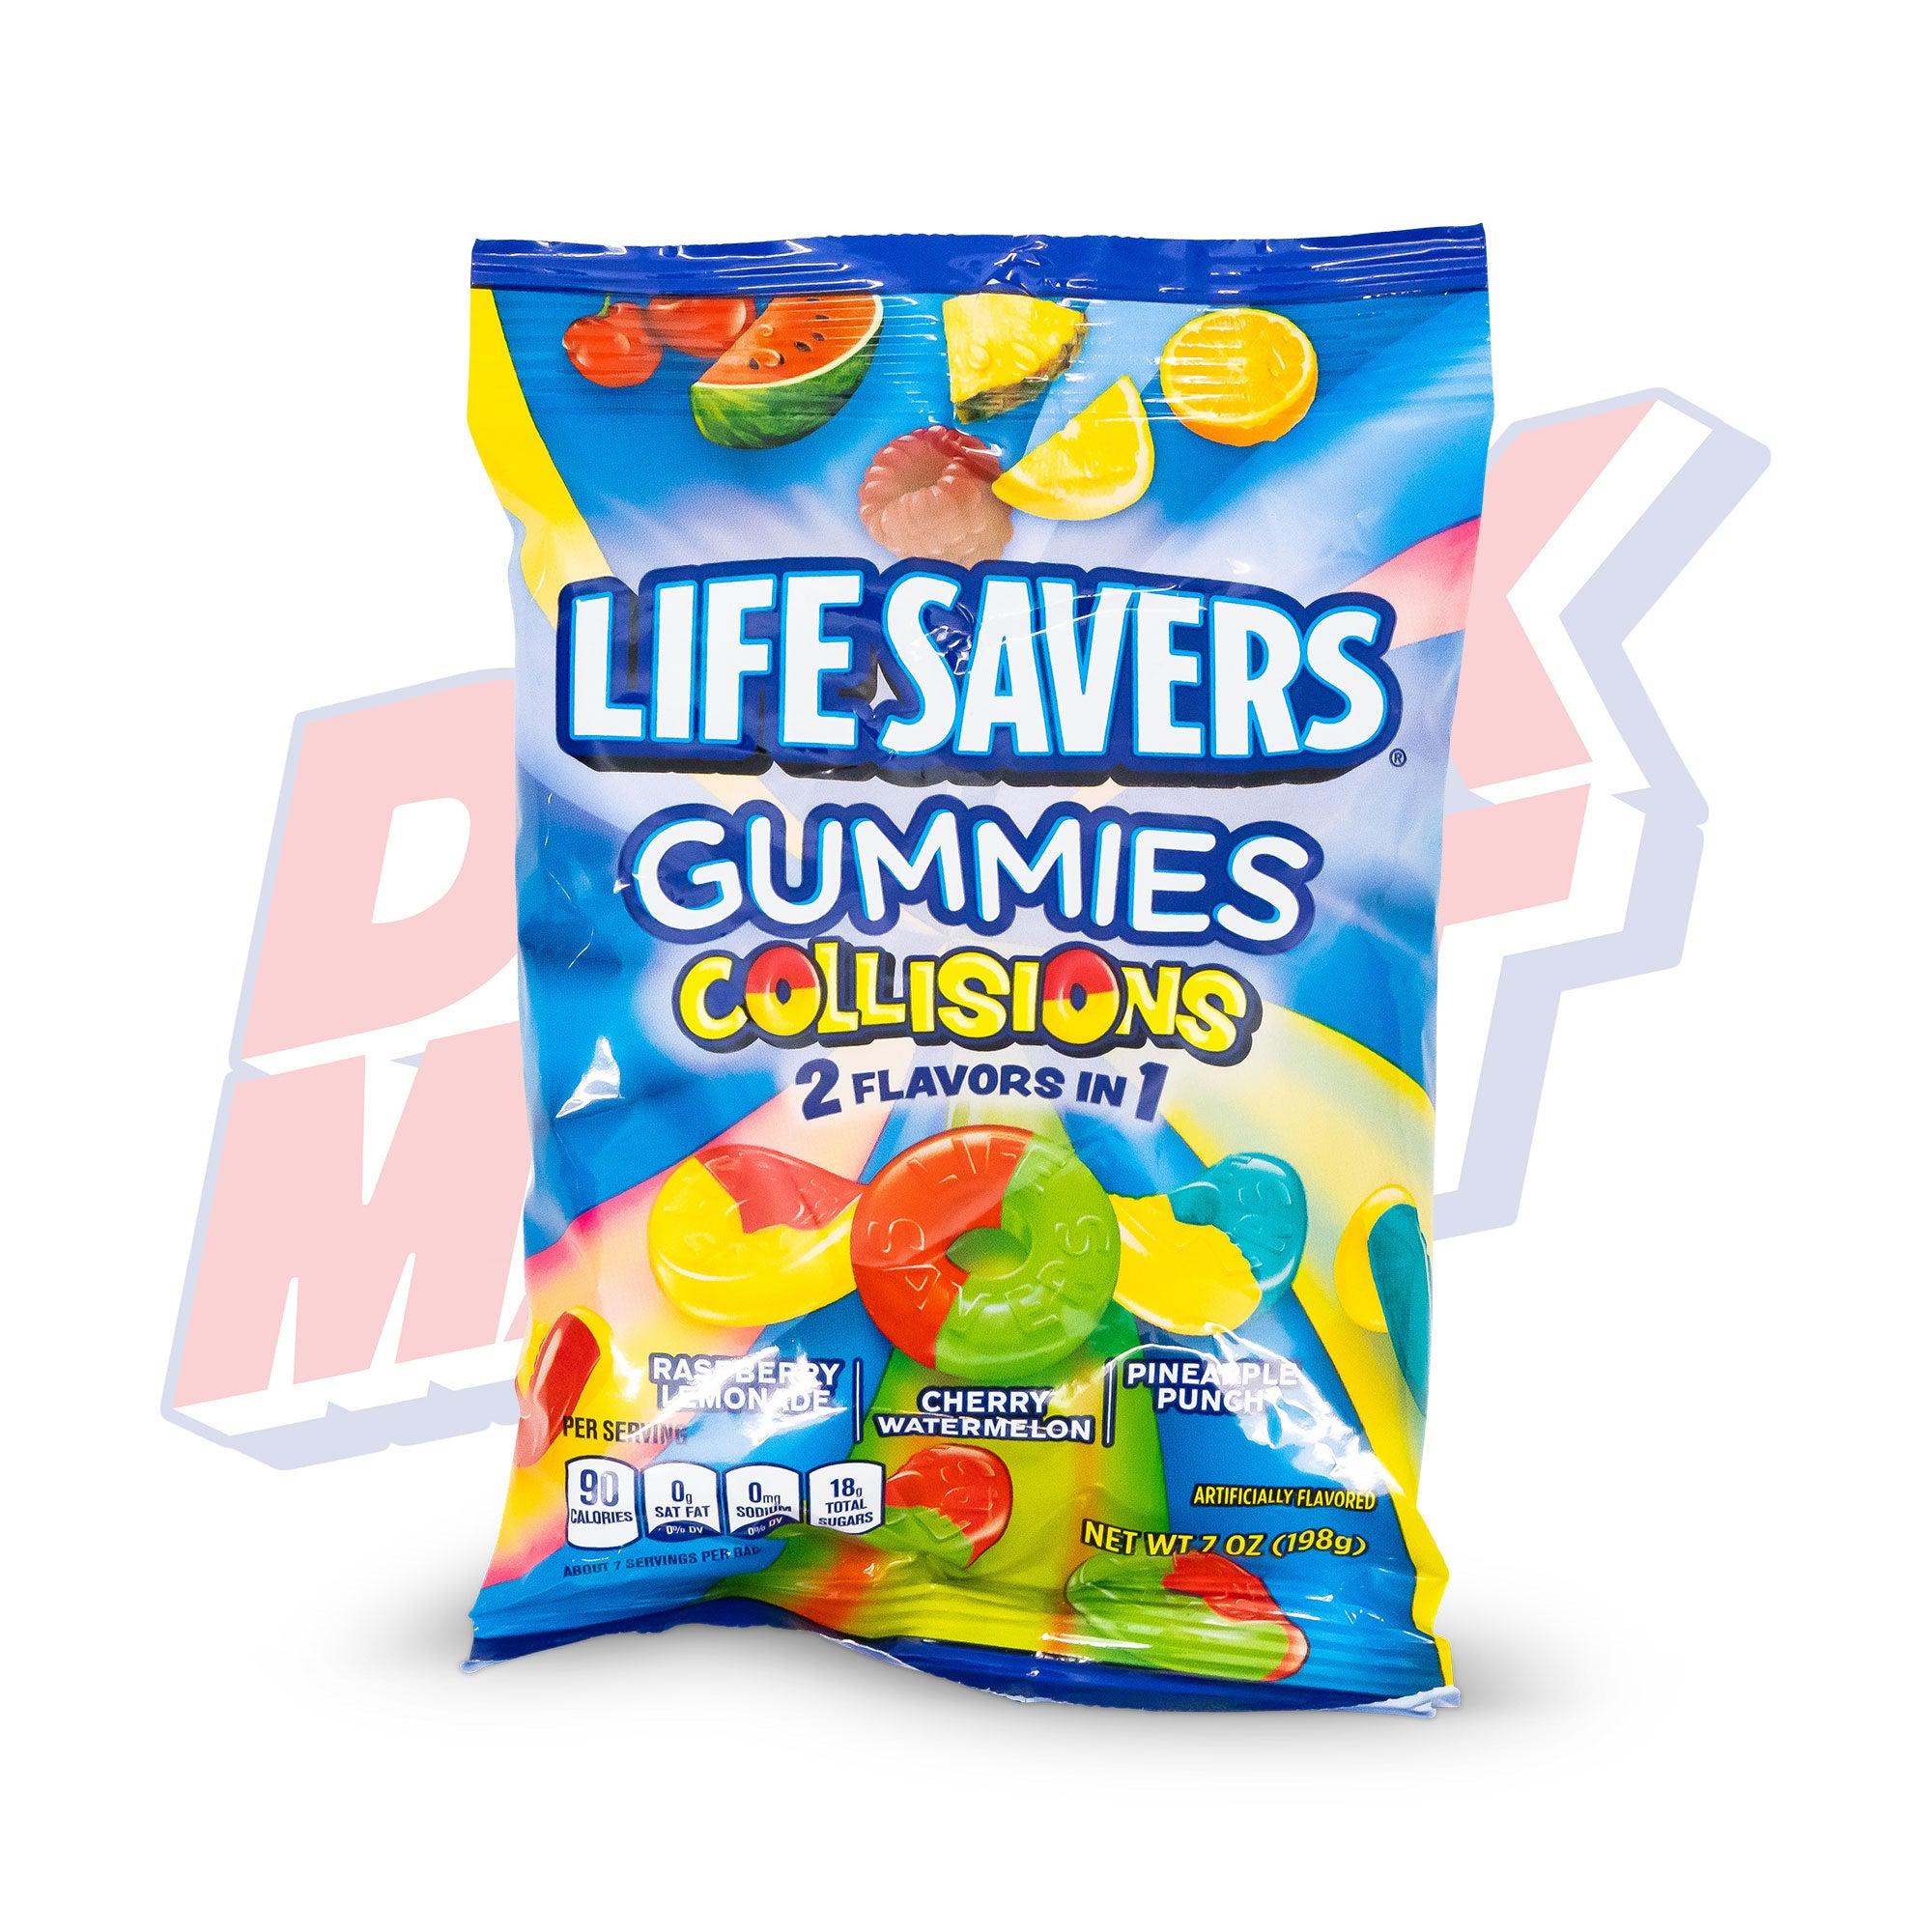 Lifesavers Gummies Collisions - 7oz